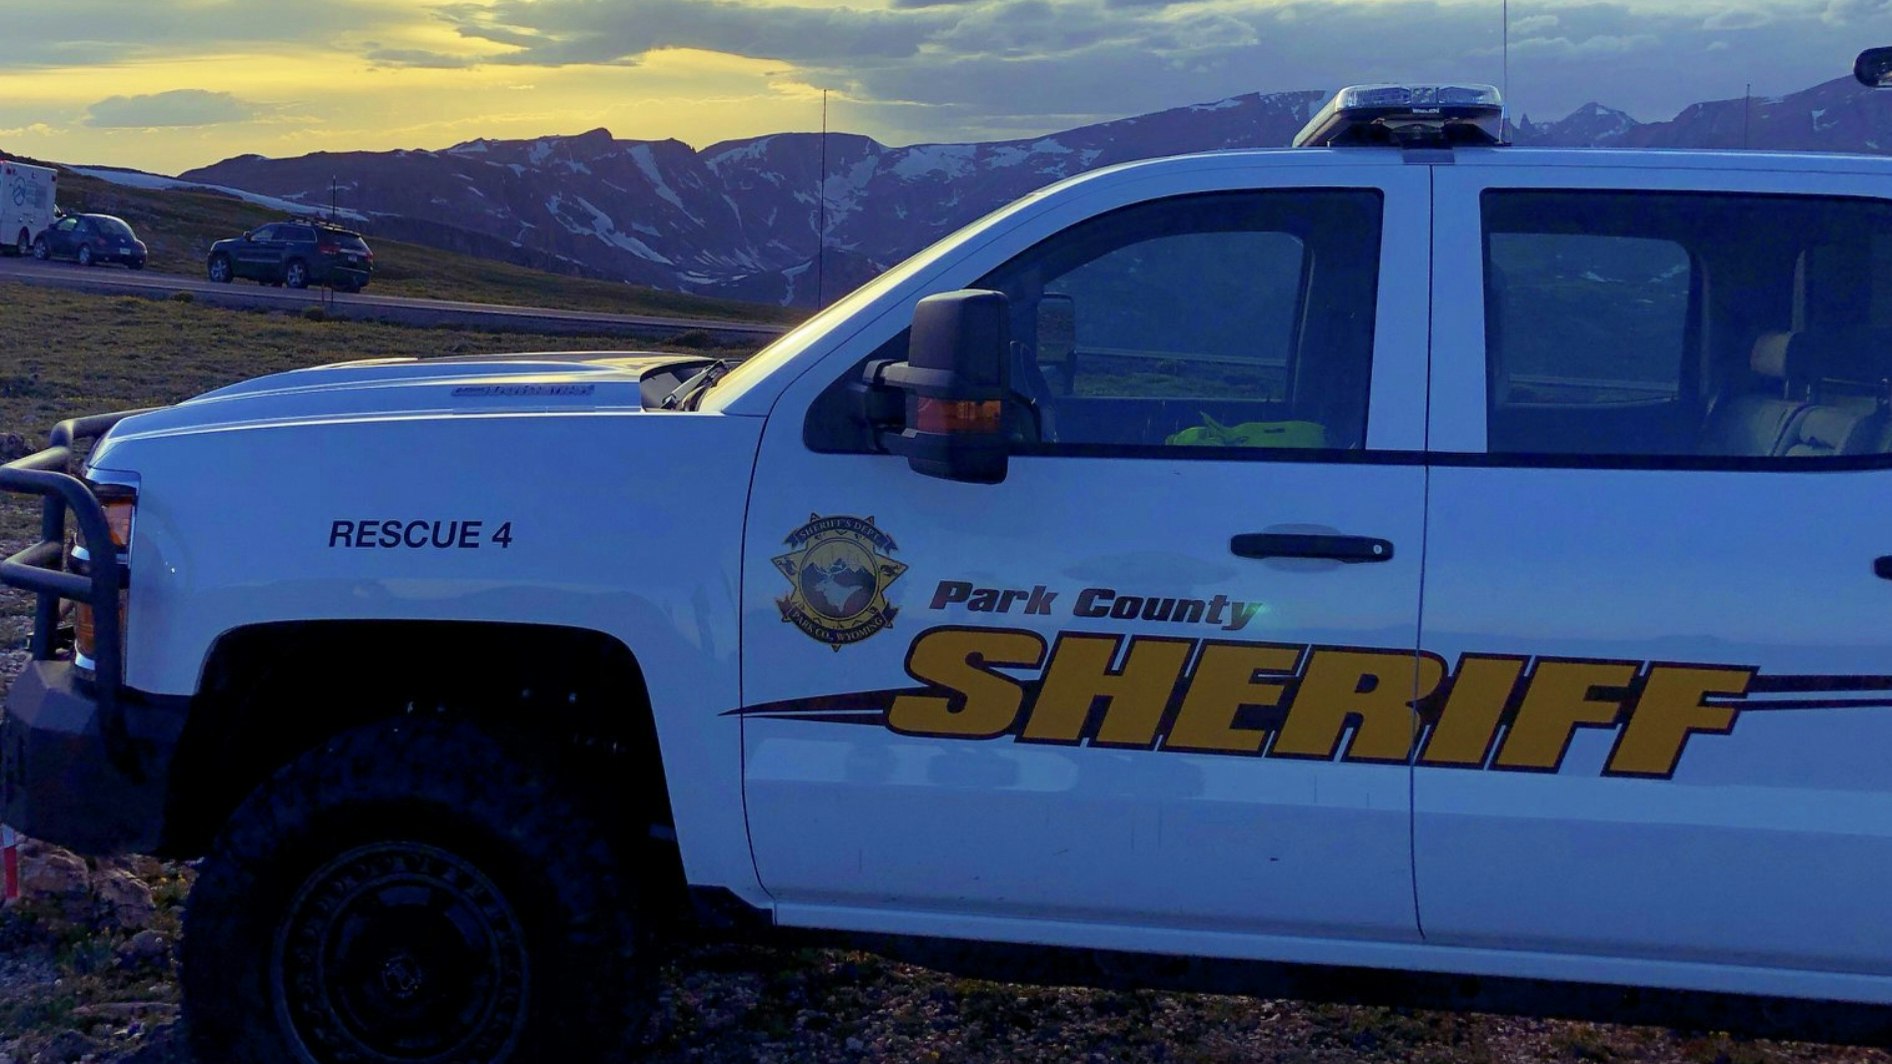 Park county sheriff 8 31 22